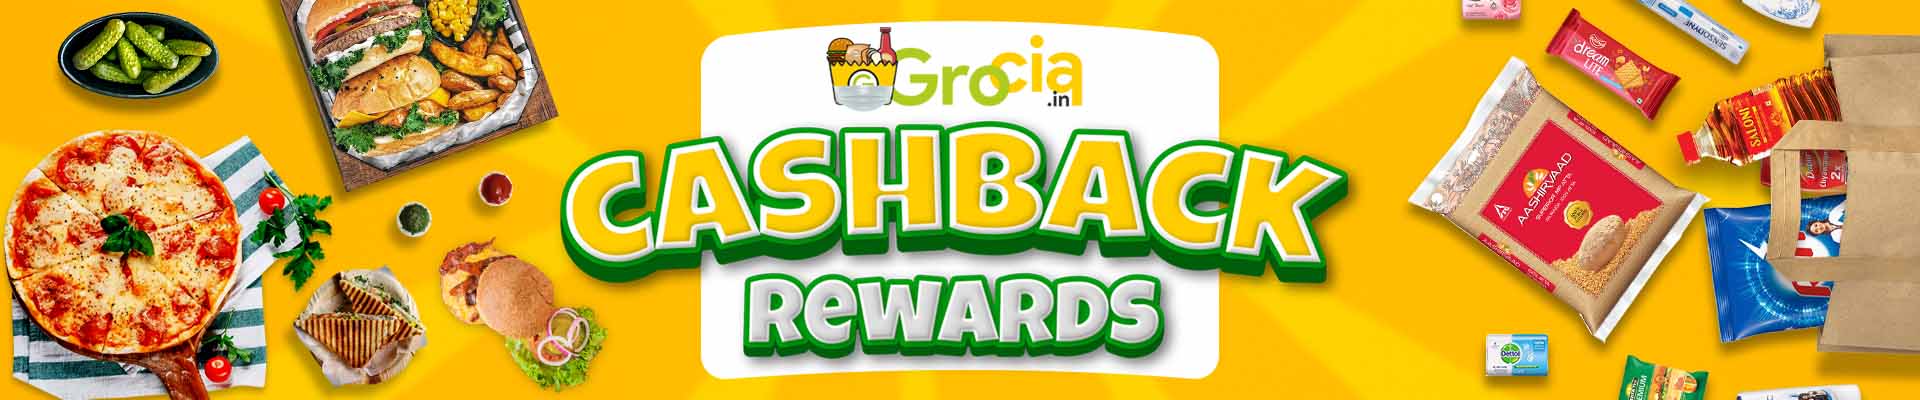 cashback reward